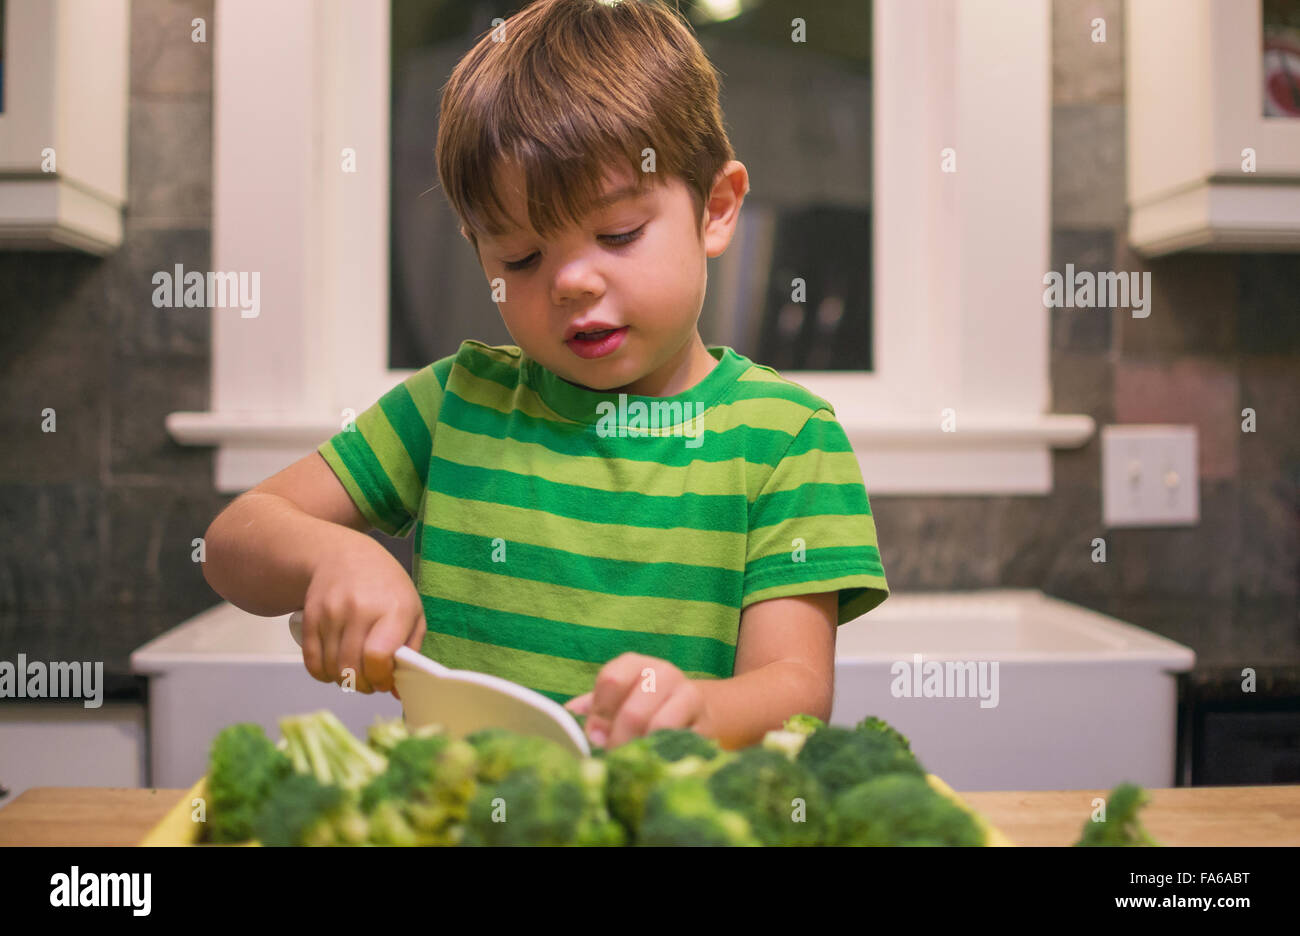 Boy in kitchen chopping broccoli Stock Photo